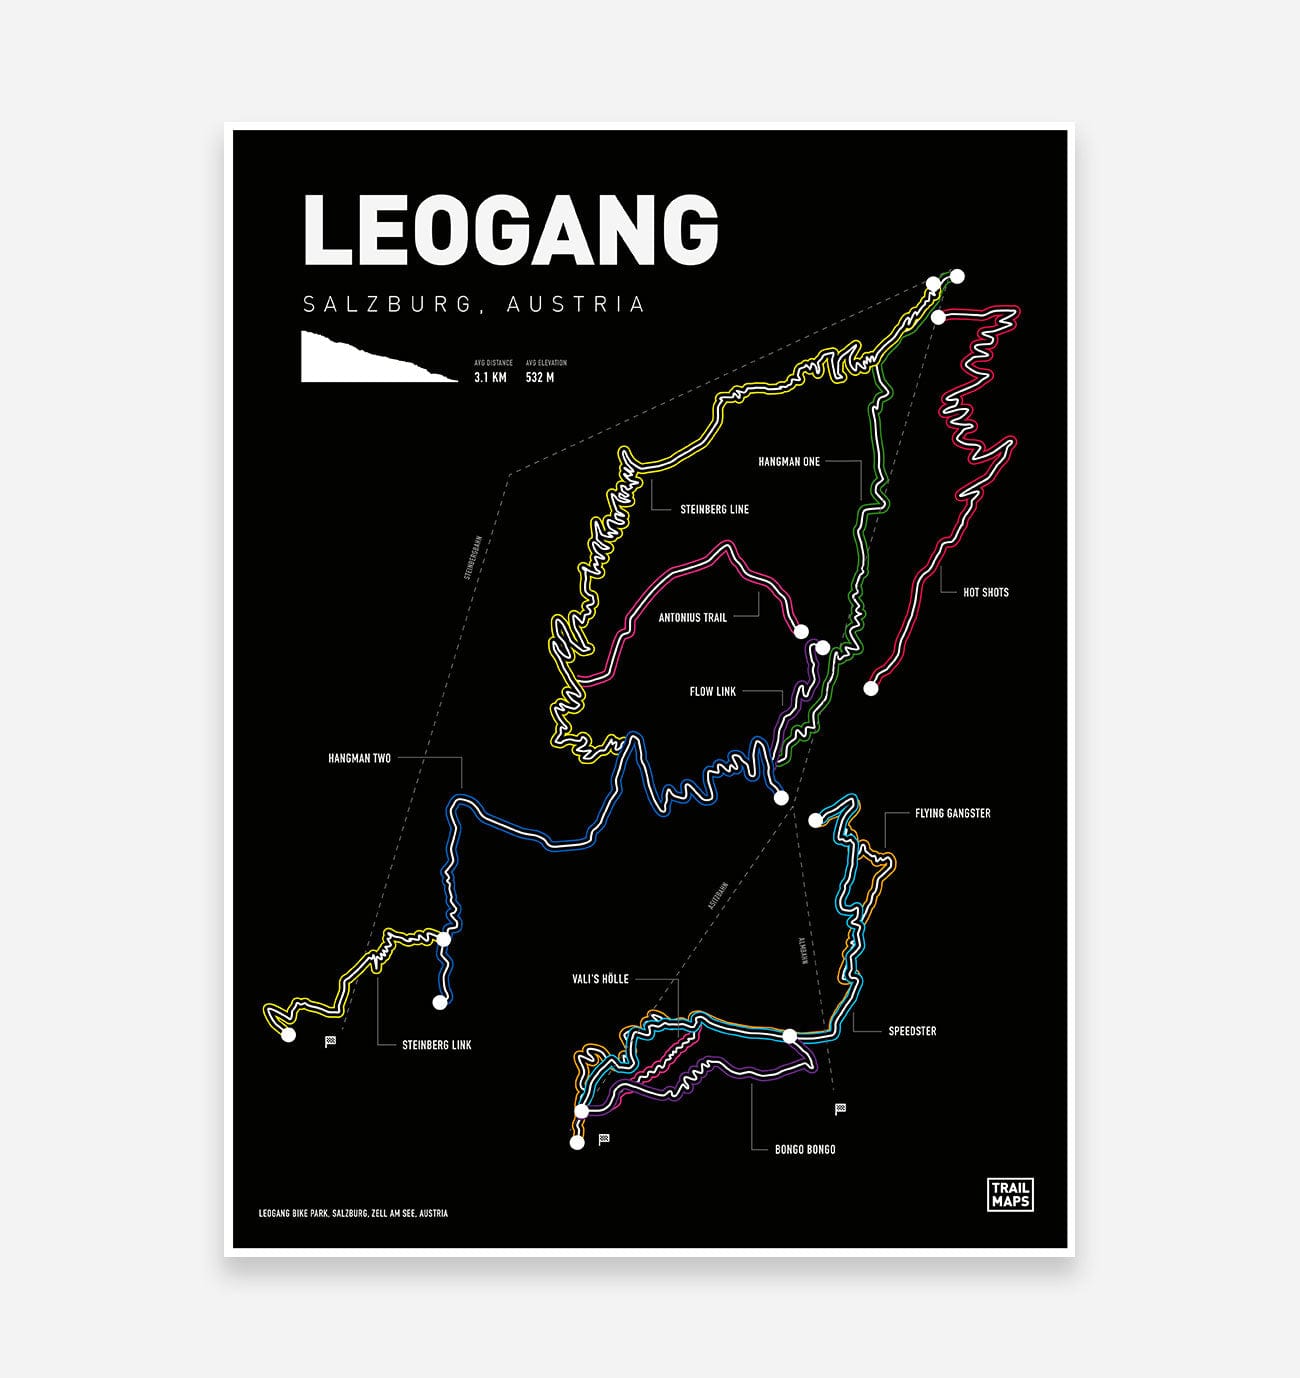 Hangman 2 Blue Line Bikepark Leogang Austria 🇦🇹 full run POV RAW 